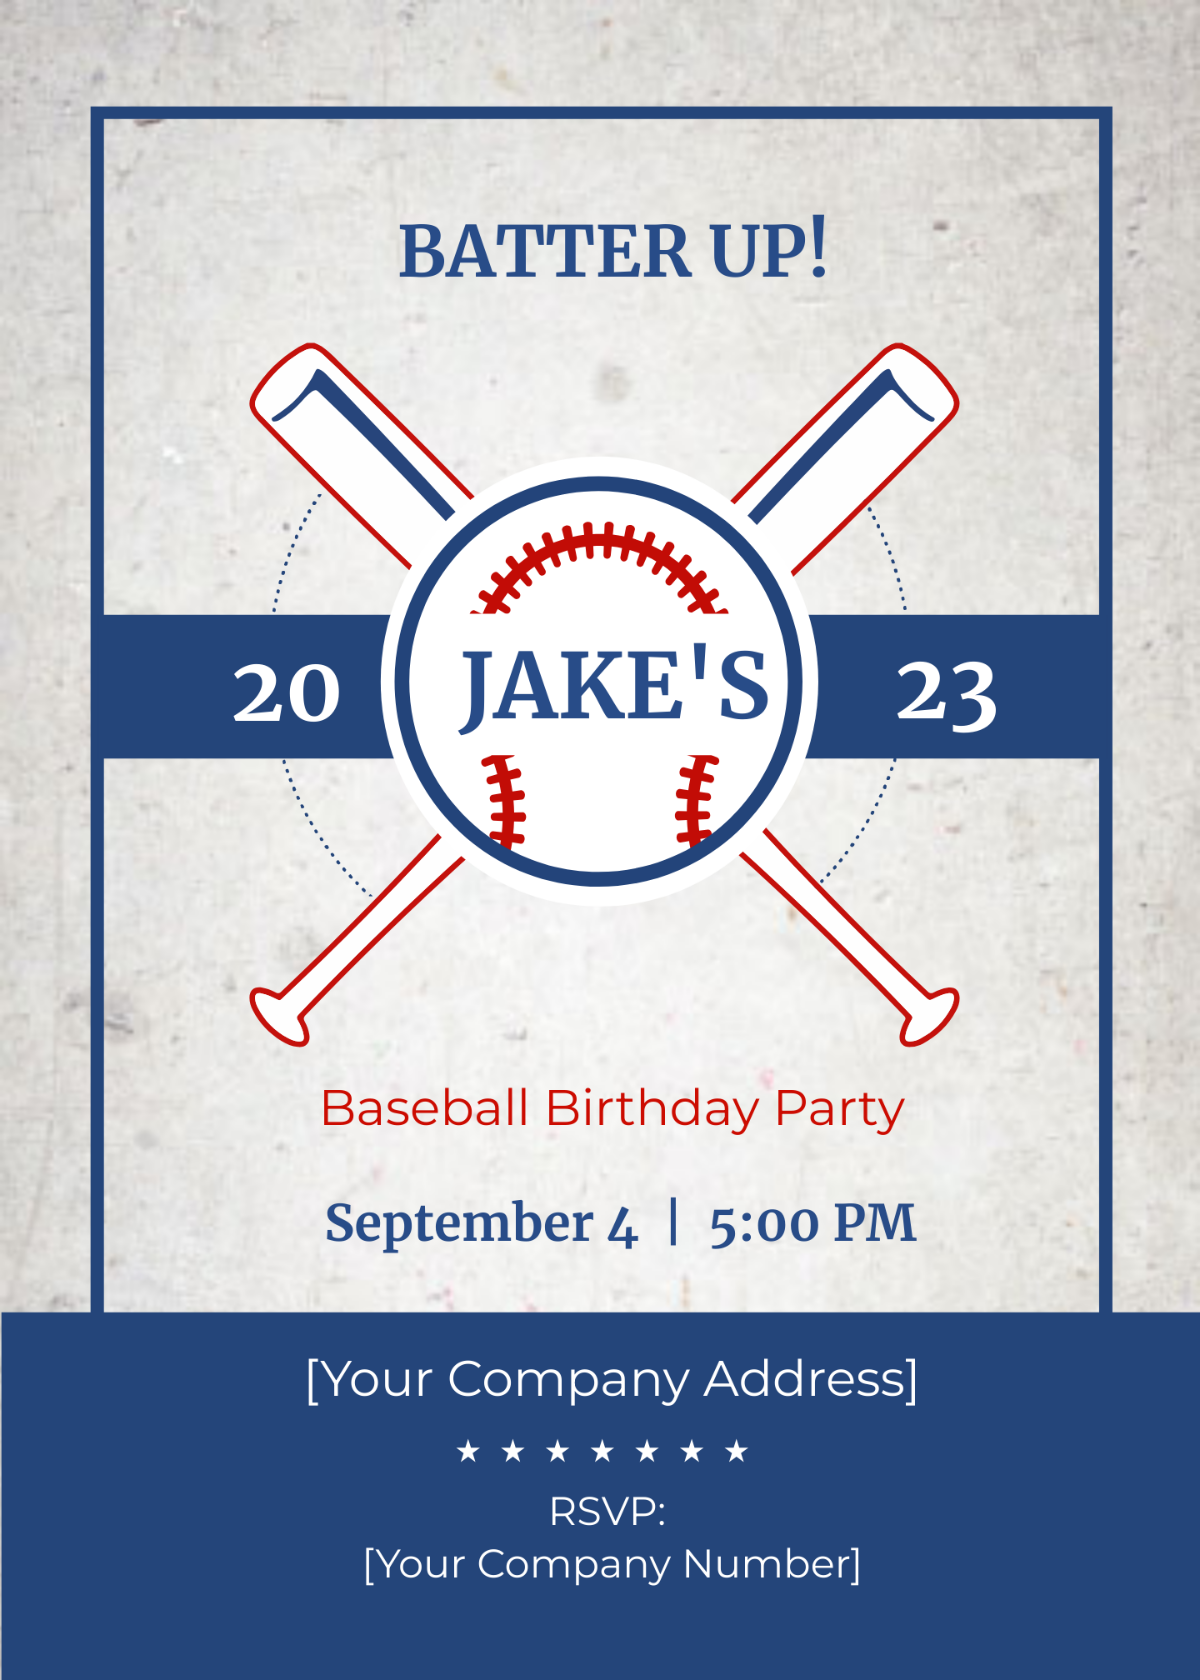 Baseball Birthday Party Invitation Template